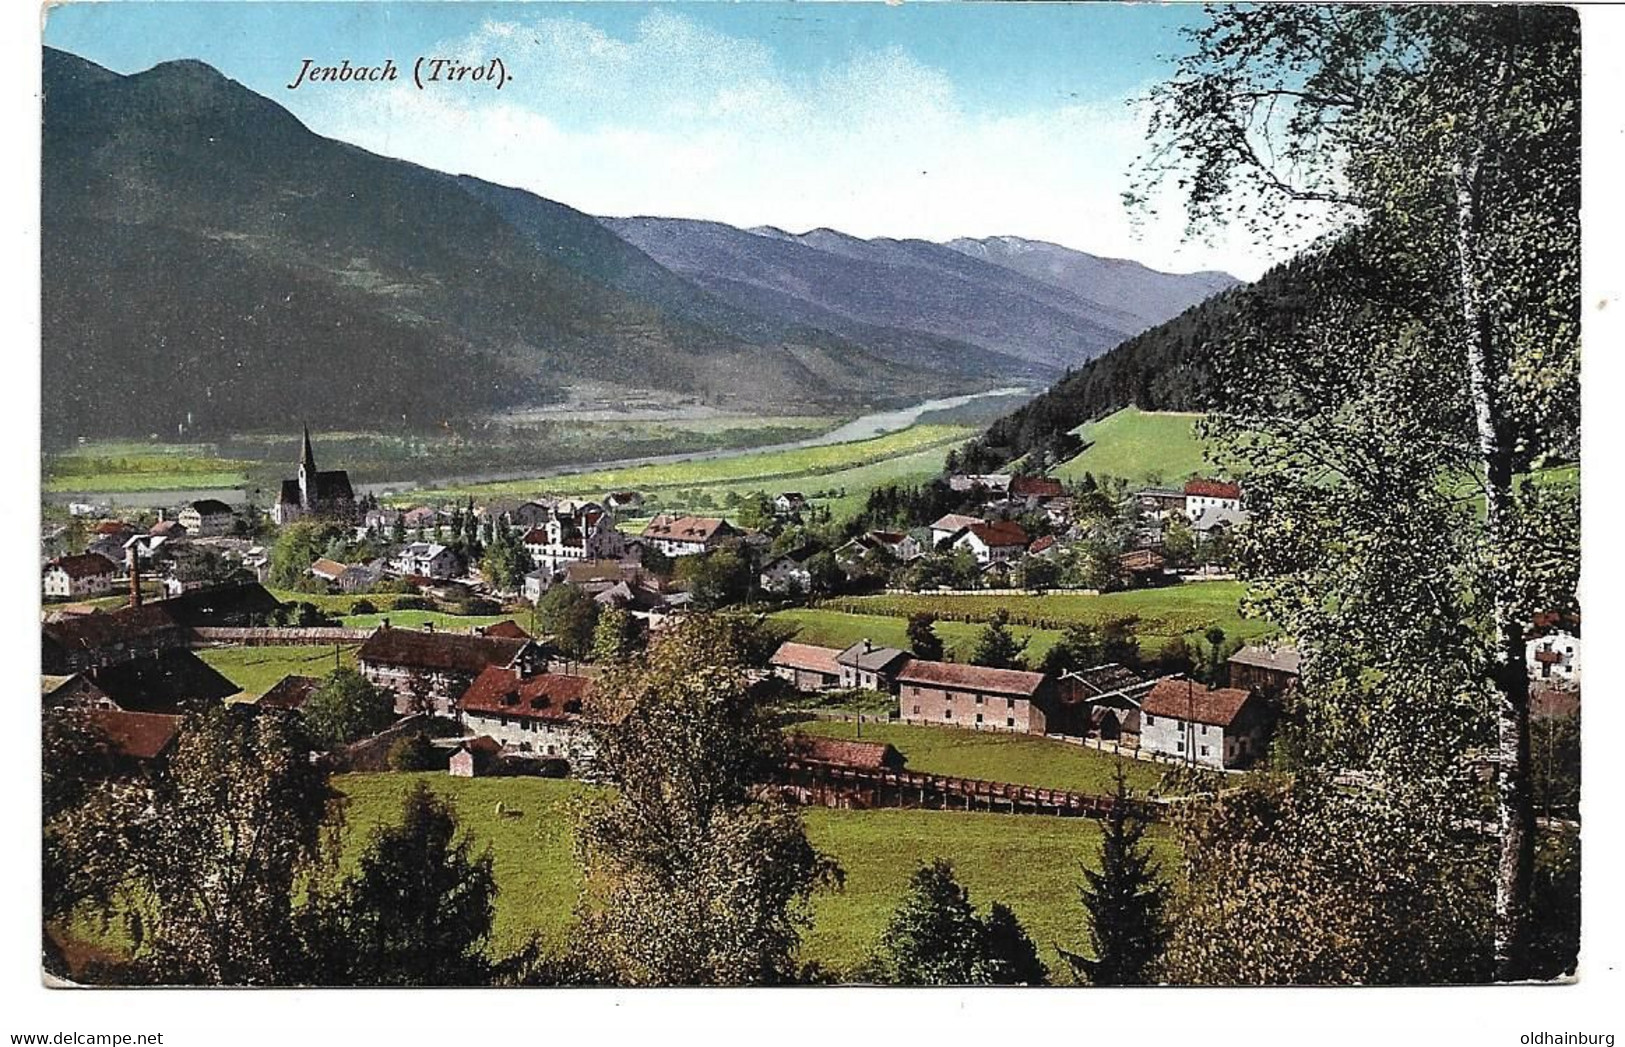 3038h: AK Panorama Jenbach, Gelaufen 1911 Nach Vöslau - Jenbach